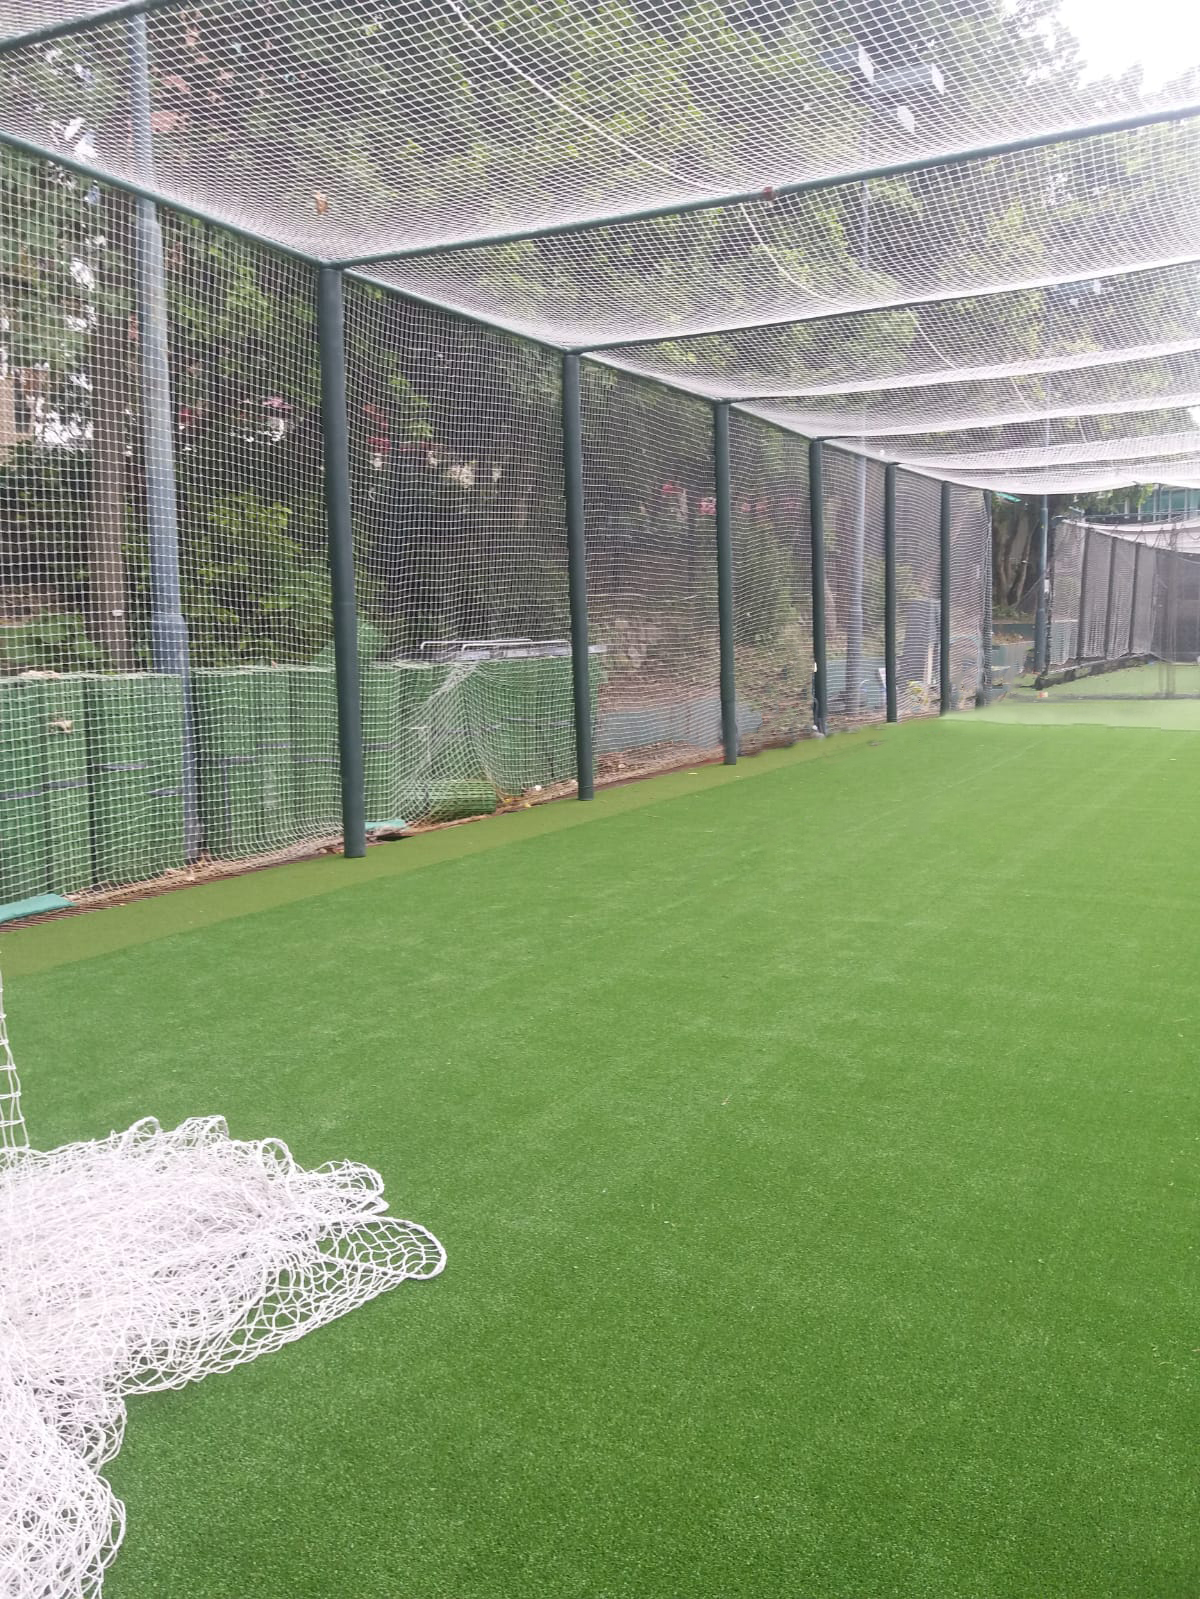 Artificial grass renovation for woodball field